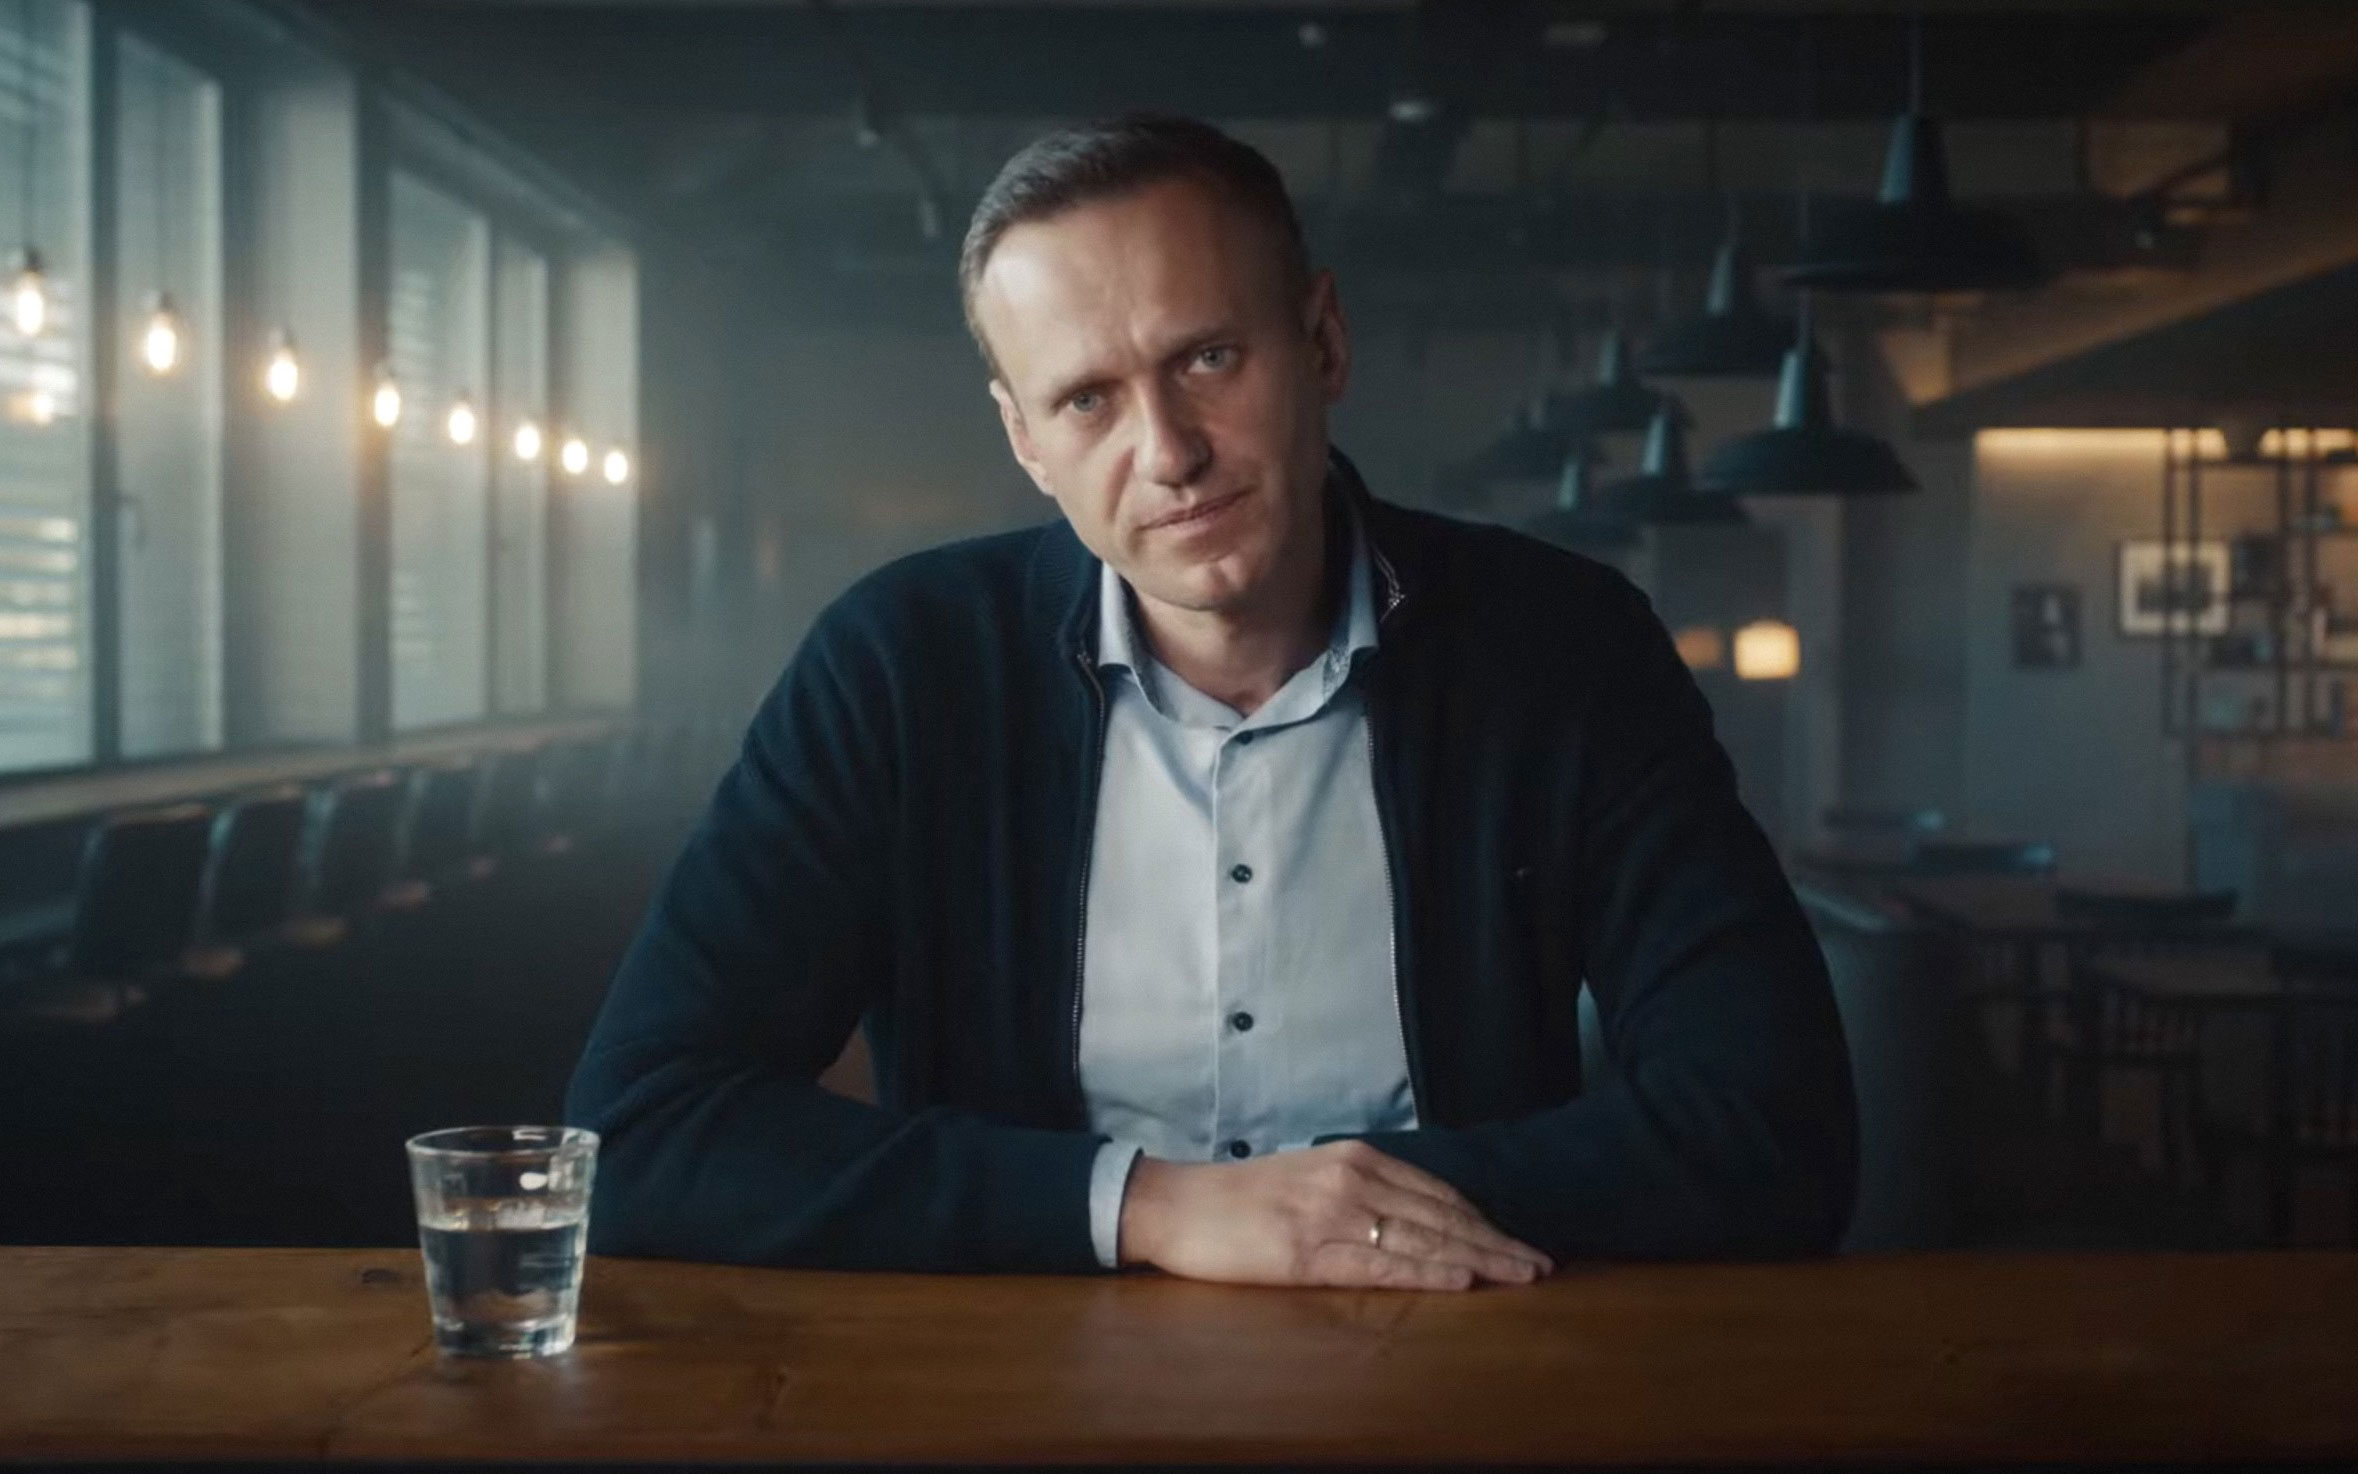 Alexei Navalny in NAVALNY, the documentary. (Fathom Events / Courtesy Everett Collection)